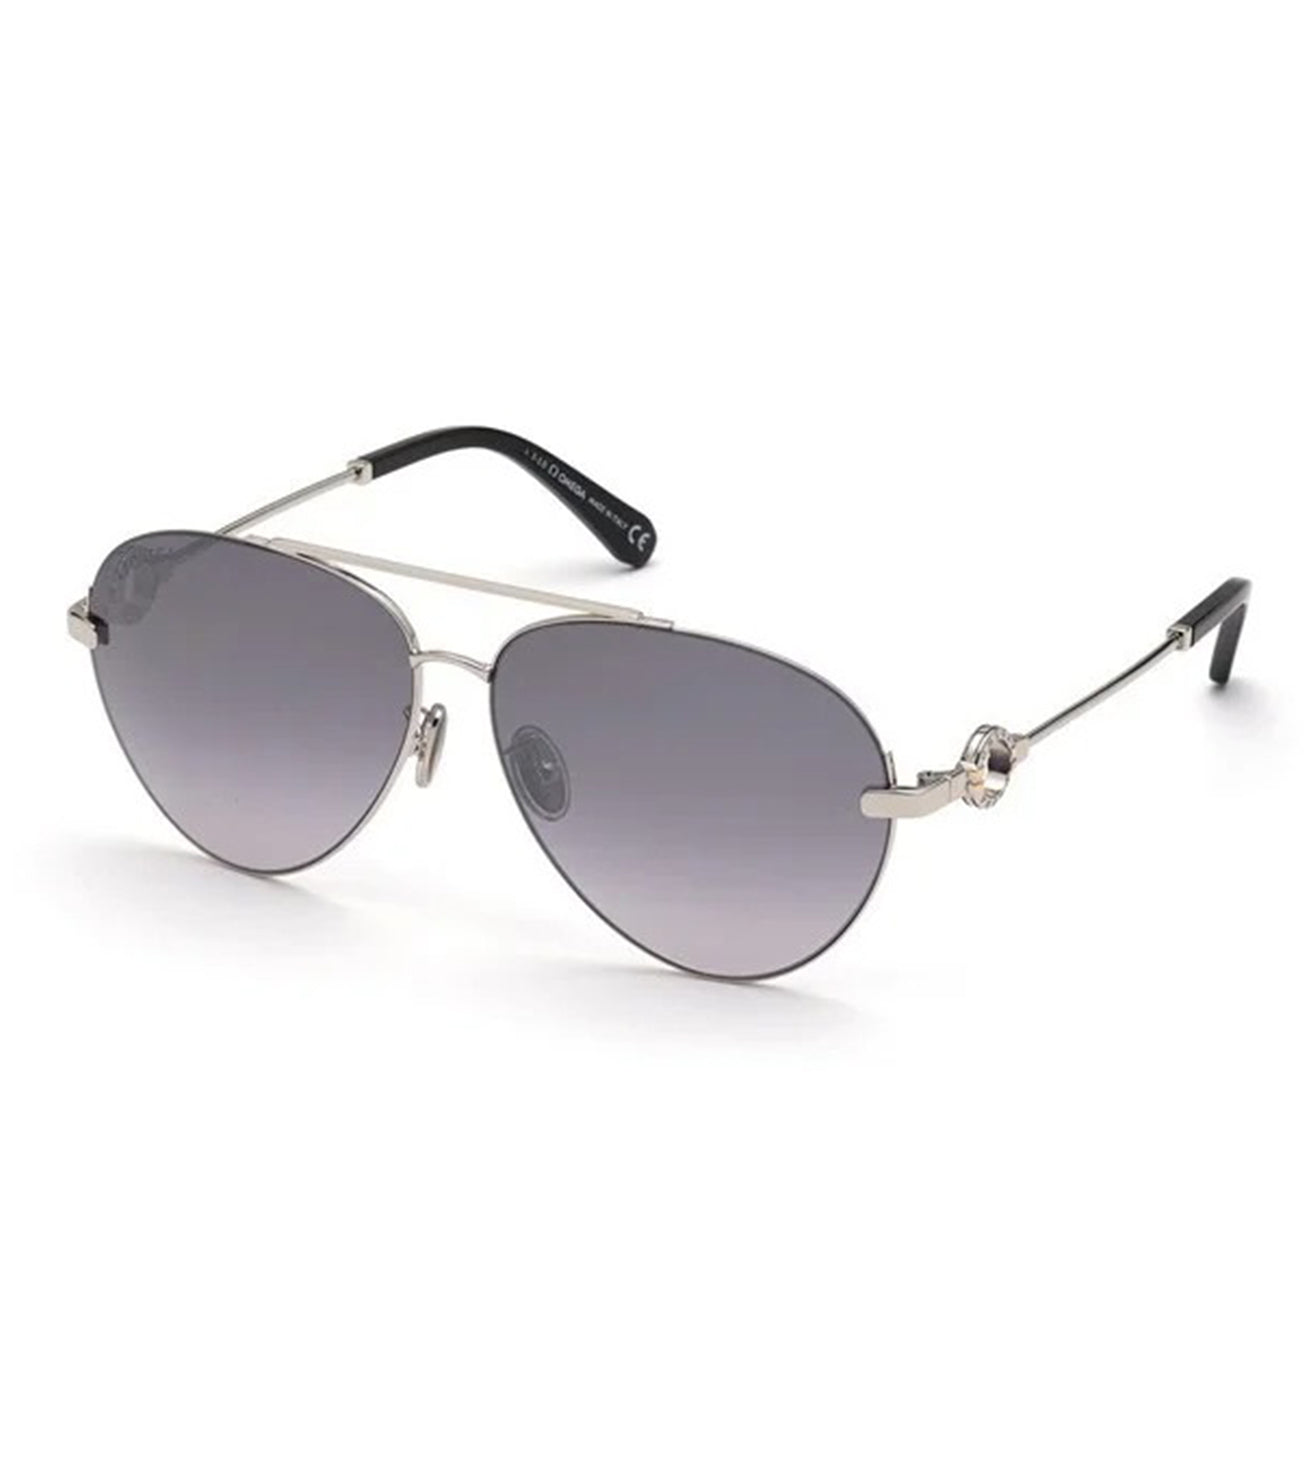 Omega Women's Gradient Blue/Silver-mirror Aviator Sunglasses